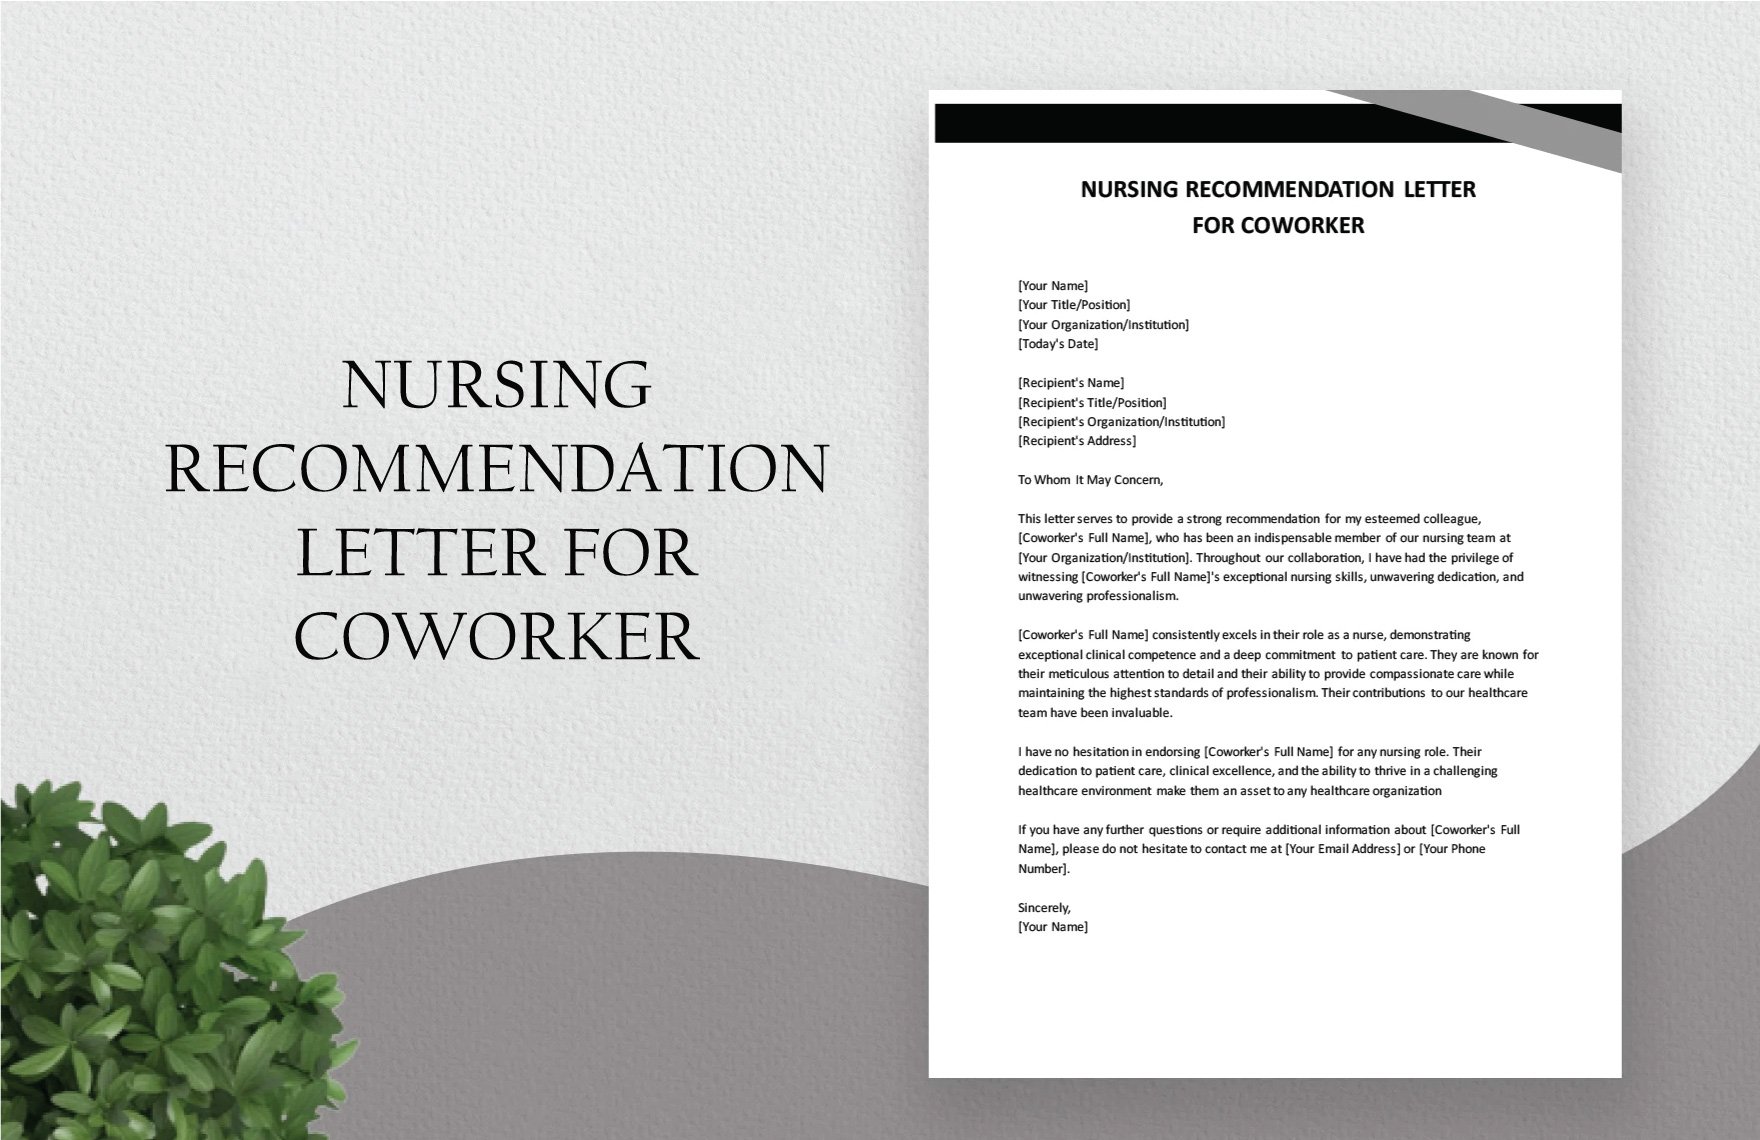 Nursing Recommendation Letter For Coworker in Word, Google Docs, PDF